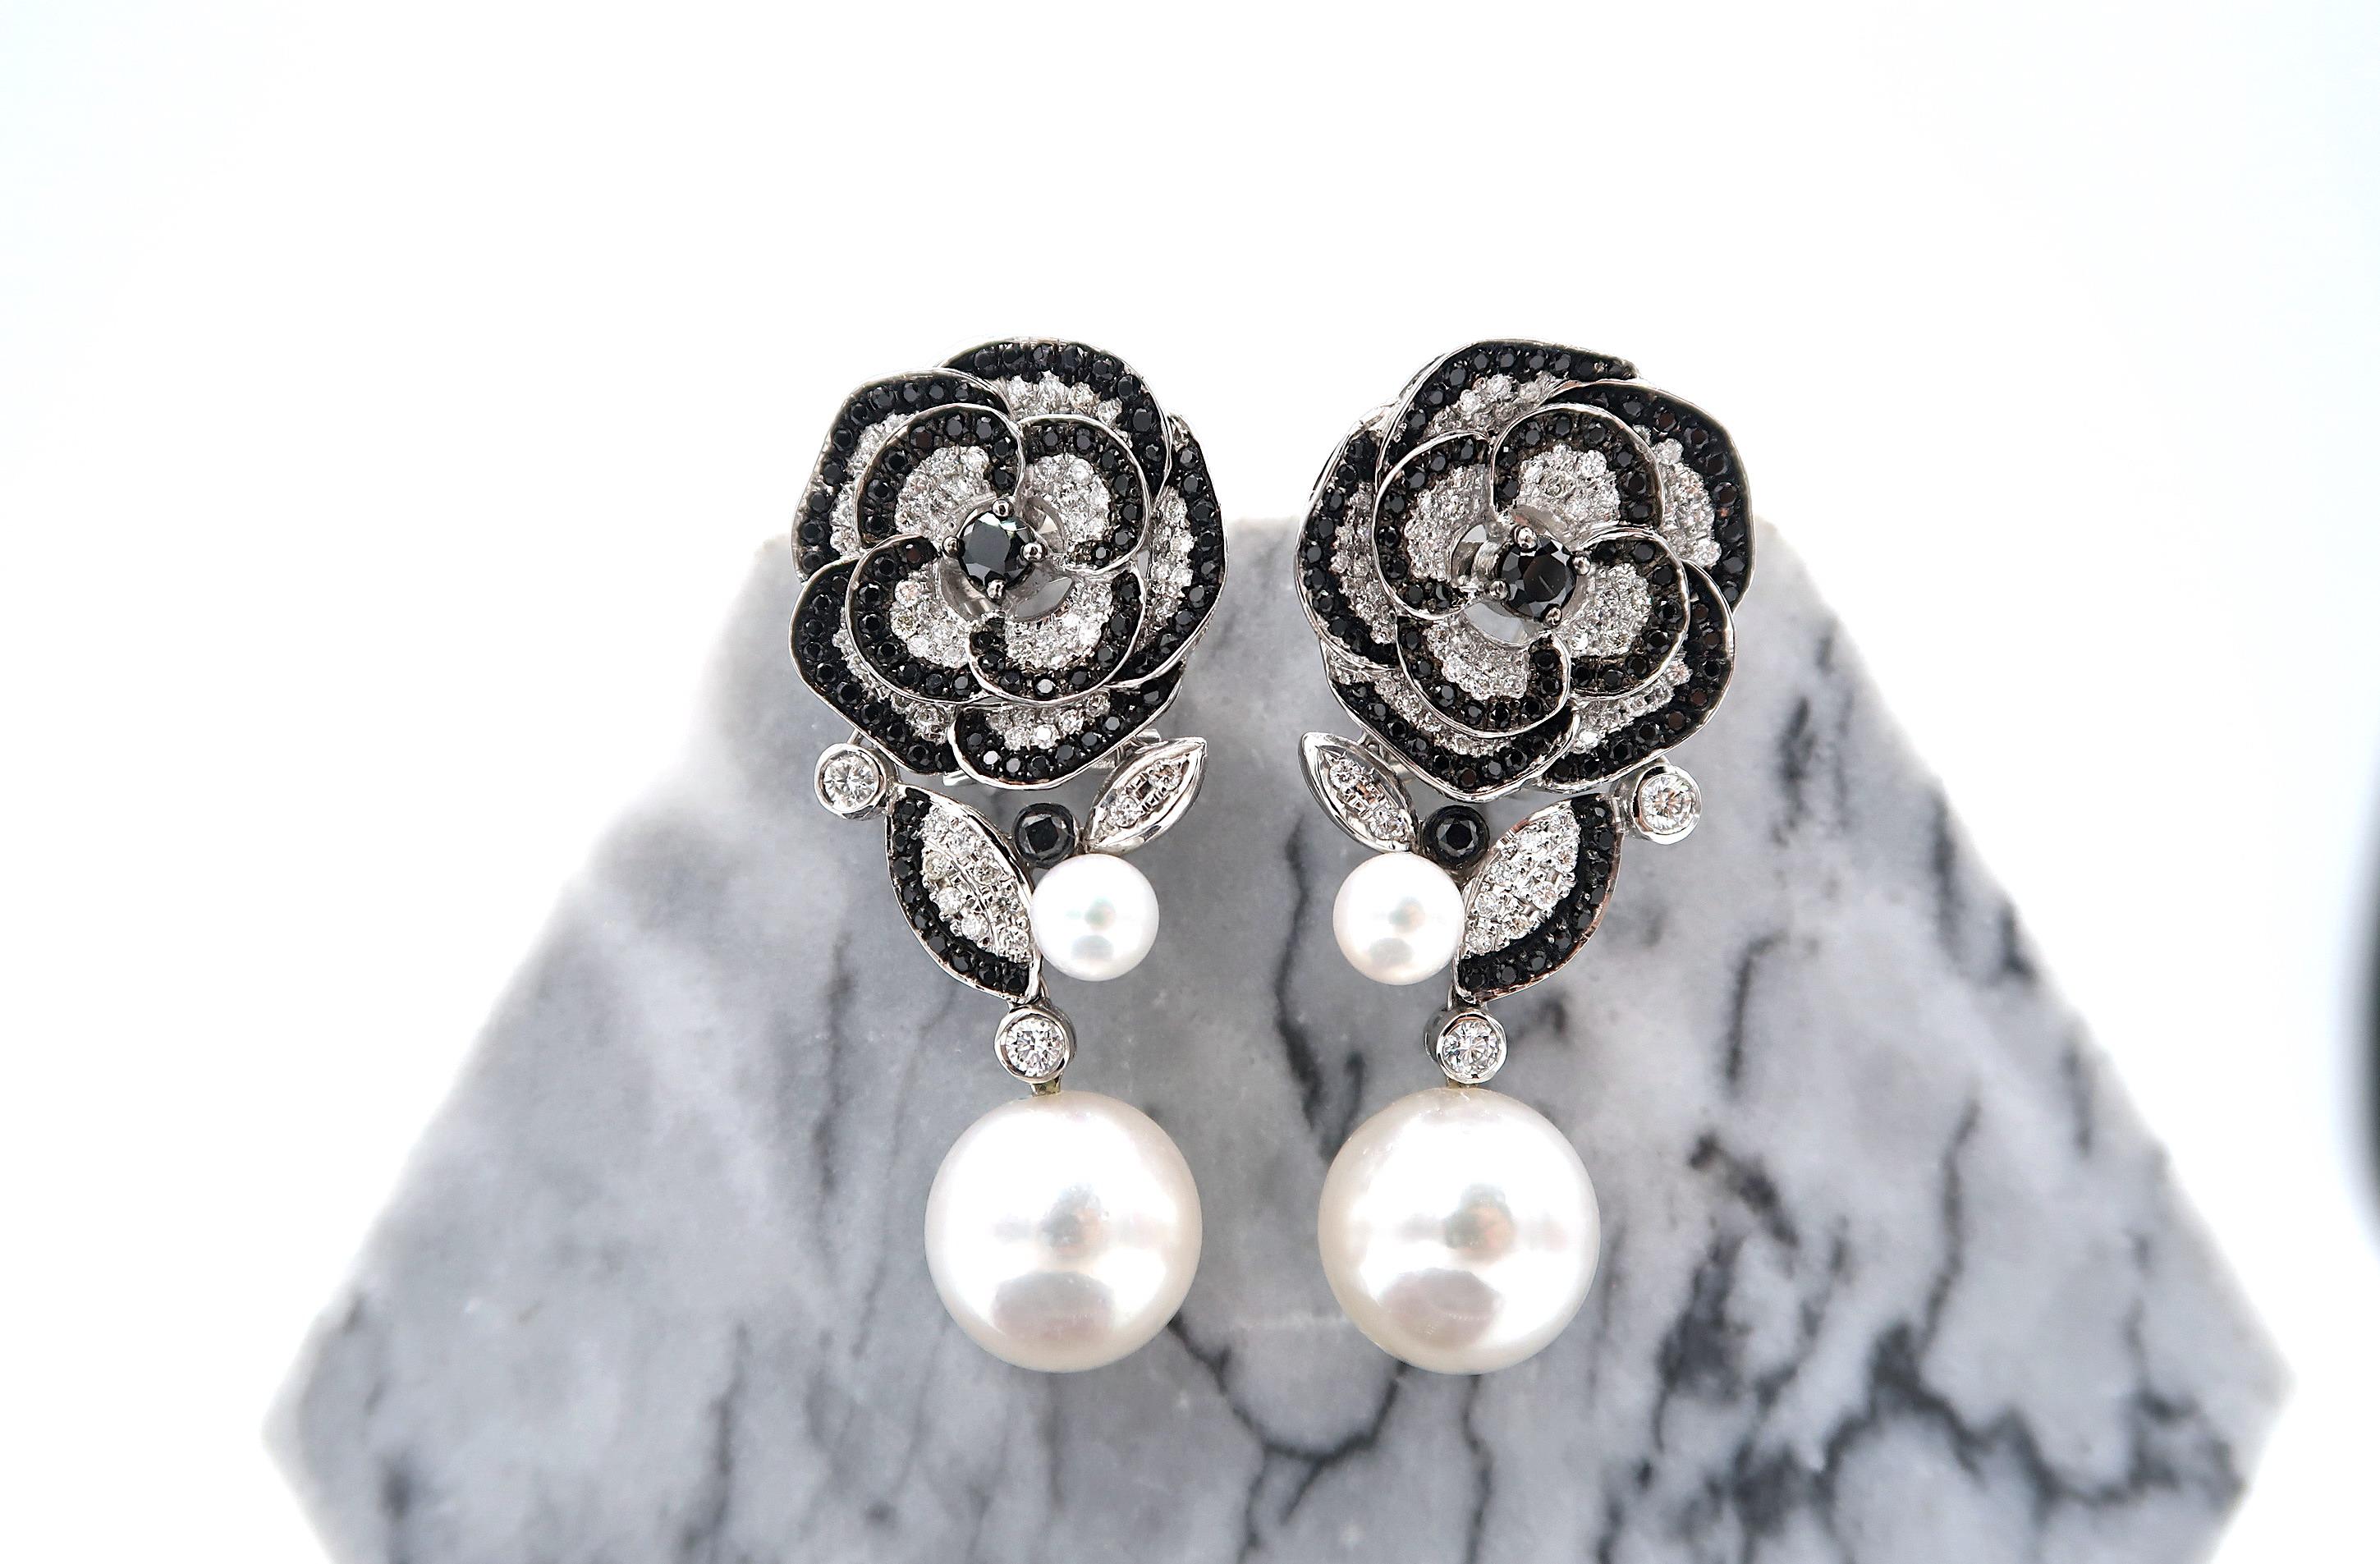 Brilliant Cut Black and White Diamond South Sea Pearl Floral Long 18 Karat White Gold Earrings